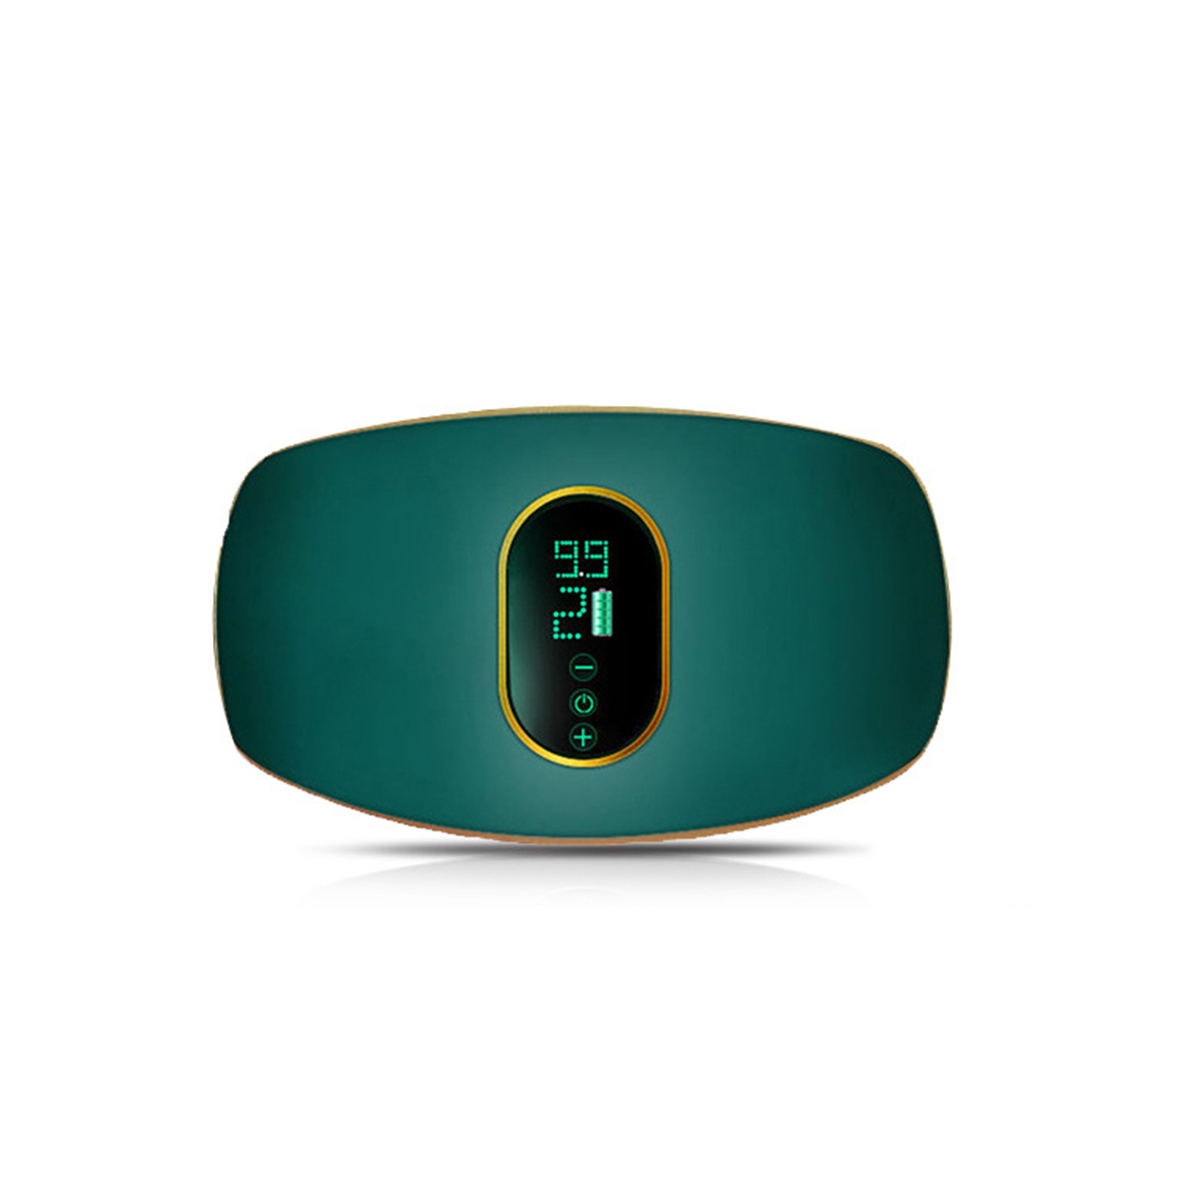 SHAOKE Massagegürtel-Fitnessgerät USB-Aufladung 3 gleichmäßige Modi Massage Massagegerät